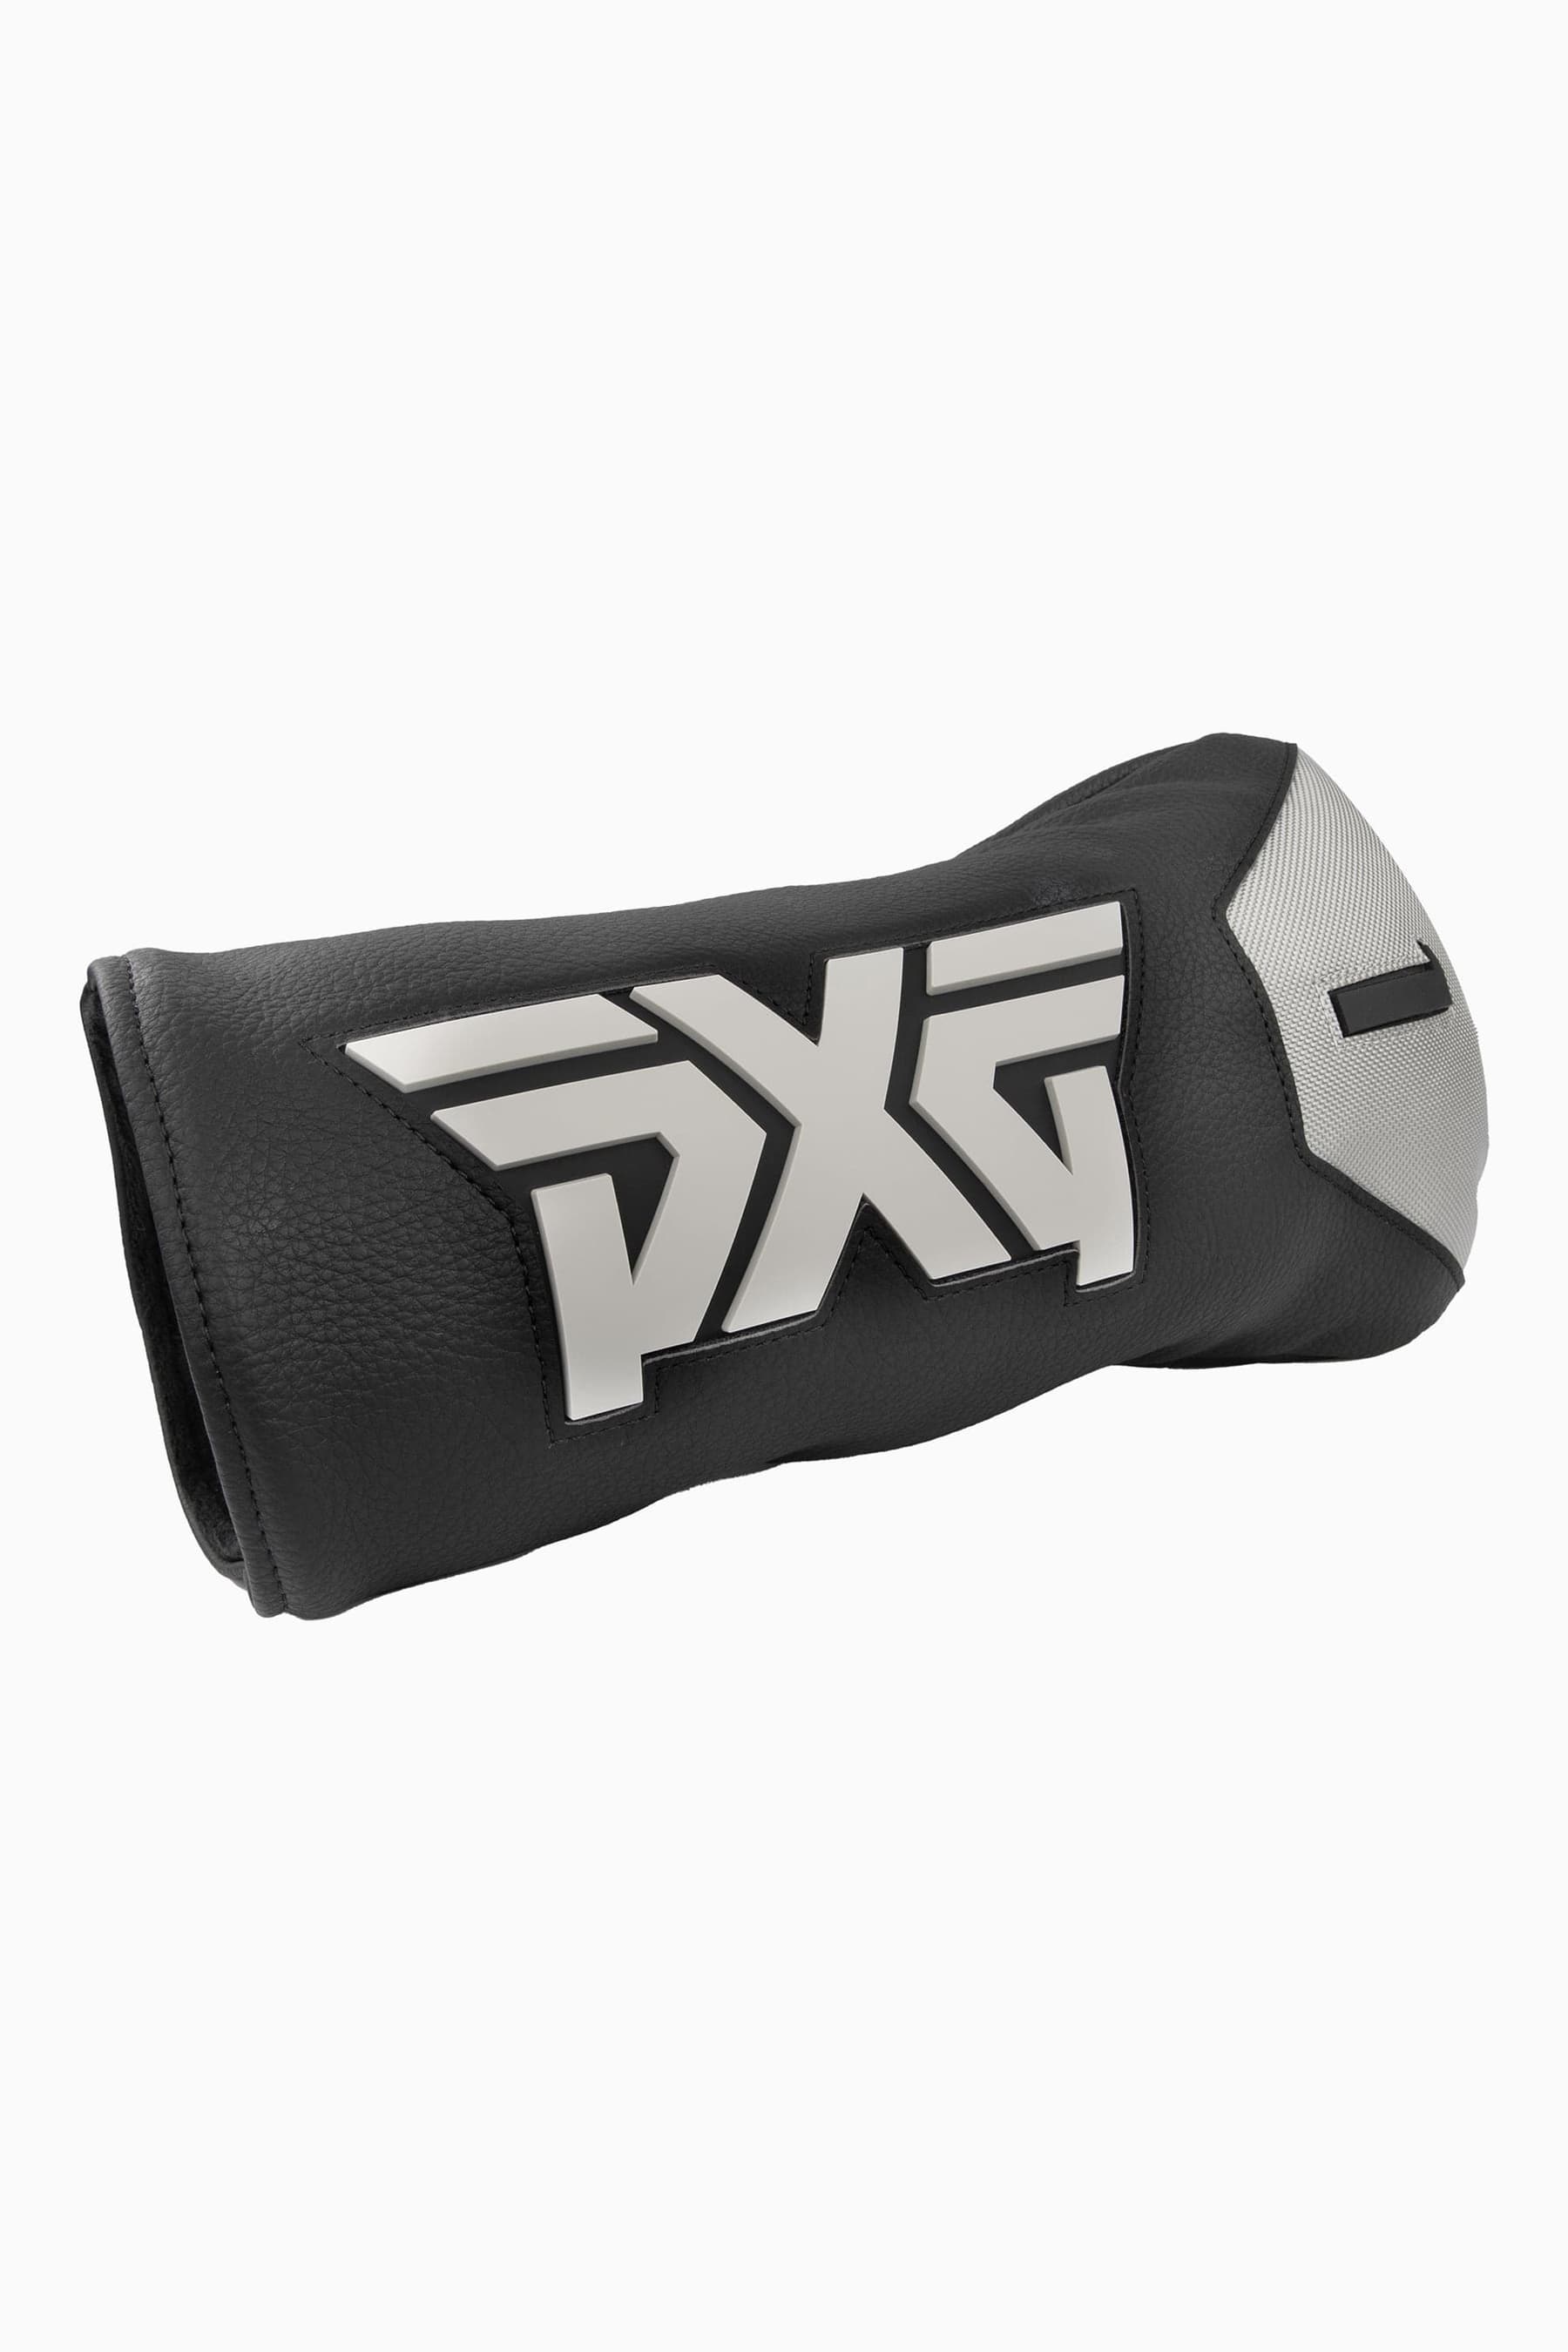 PXG Unisex Gen4 Driver Headcover